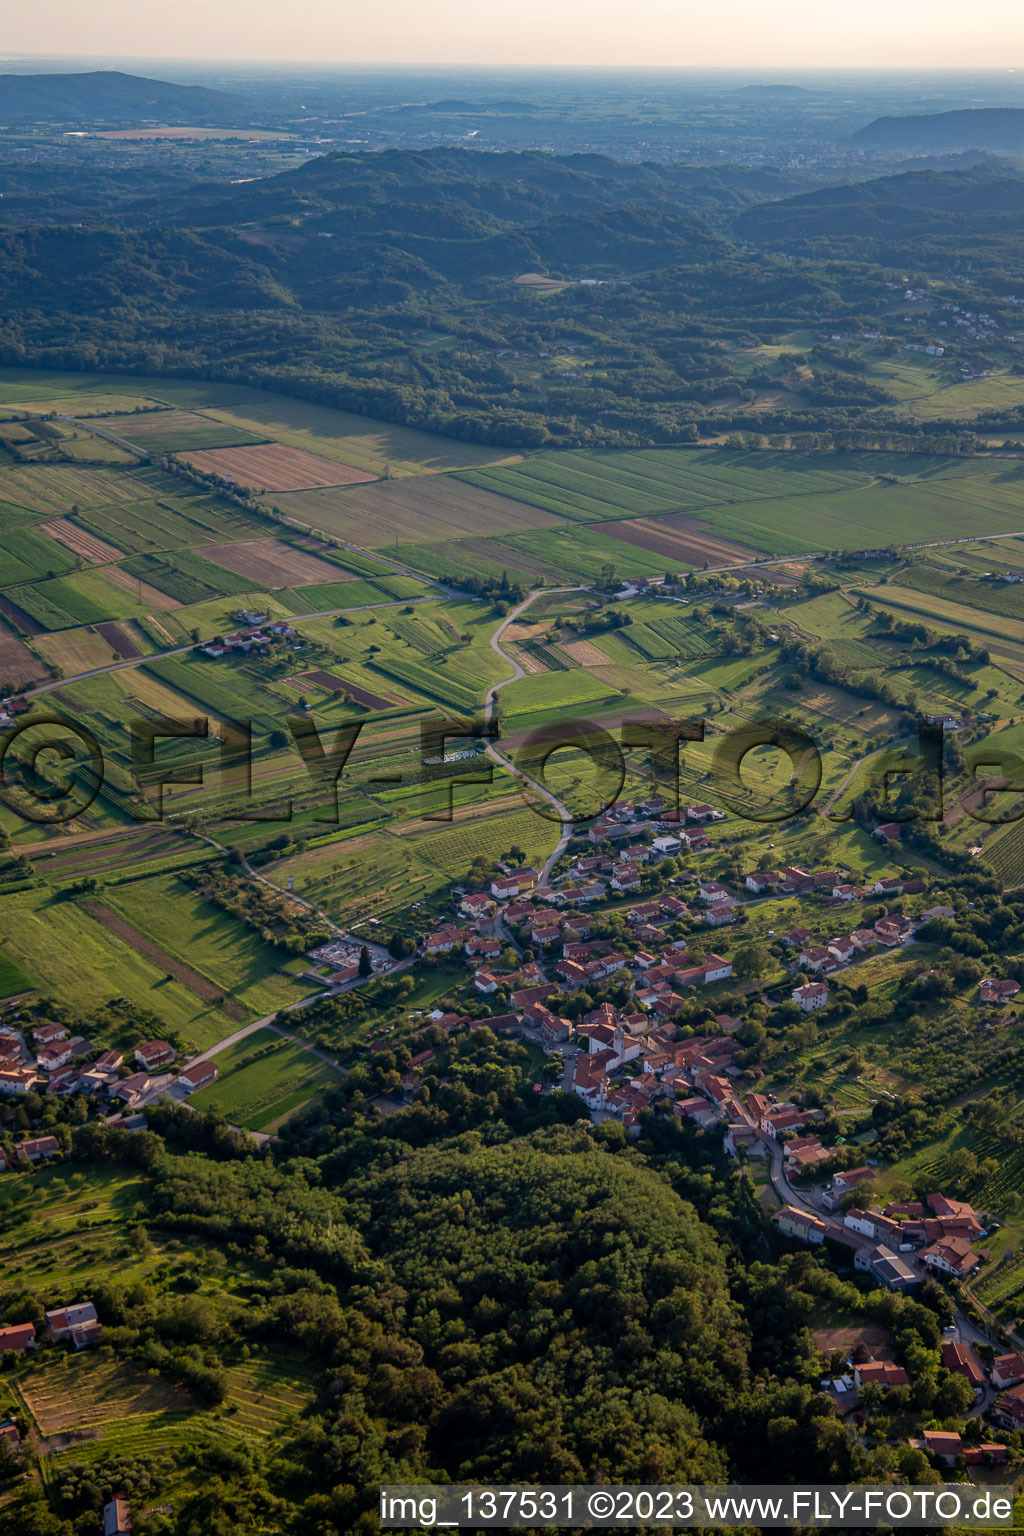 Luftbild von Ortsteil Ozeljan in Nova Gorica, Slowenien